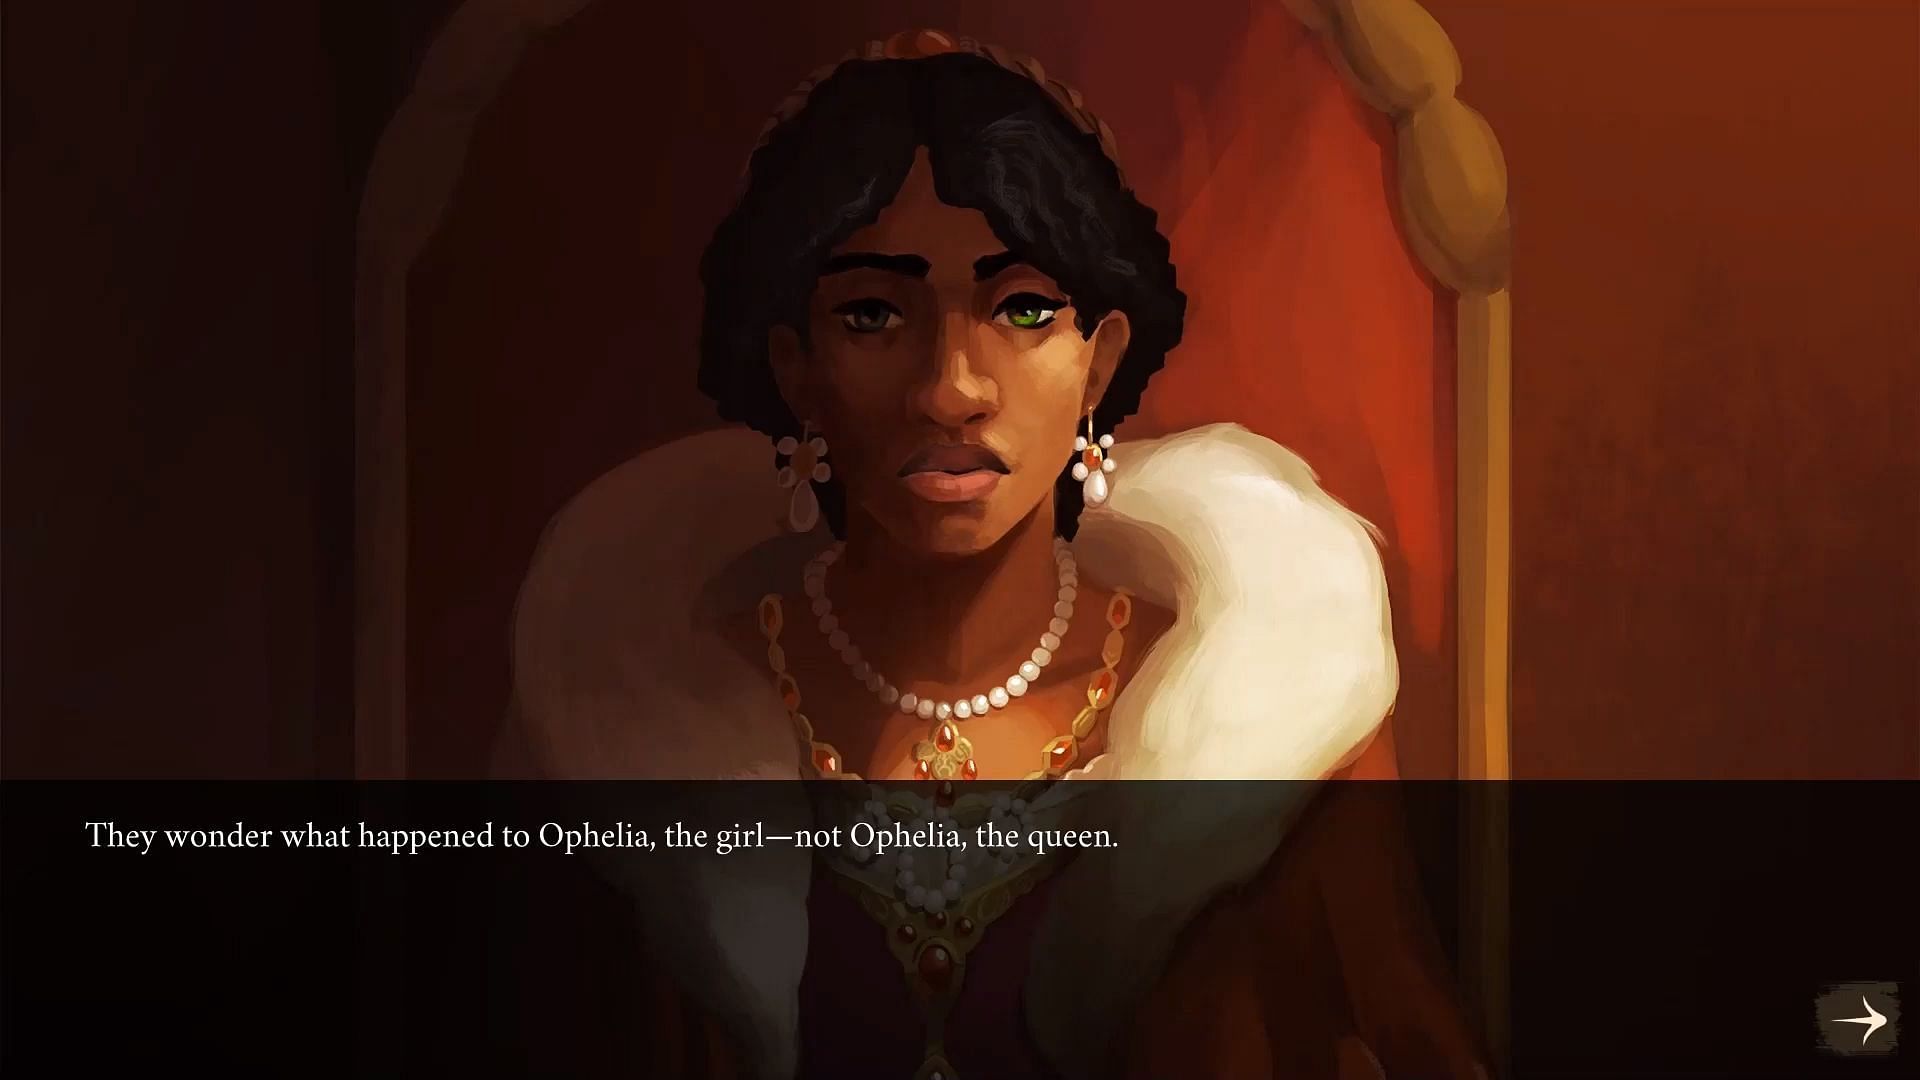 Ophelia - The Queen (Image via Elsinore)